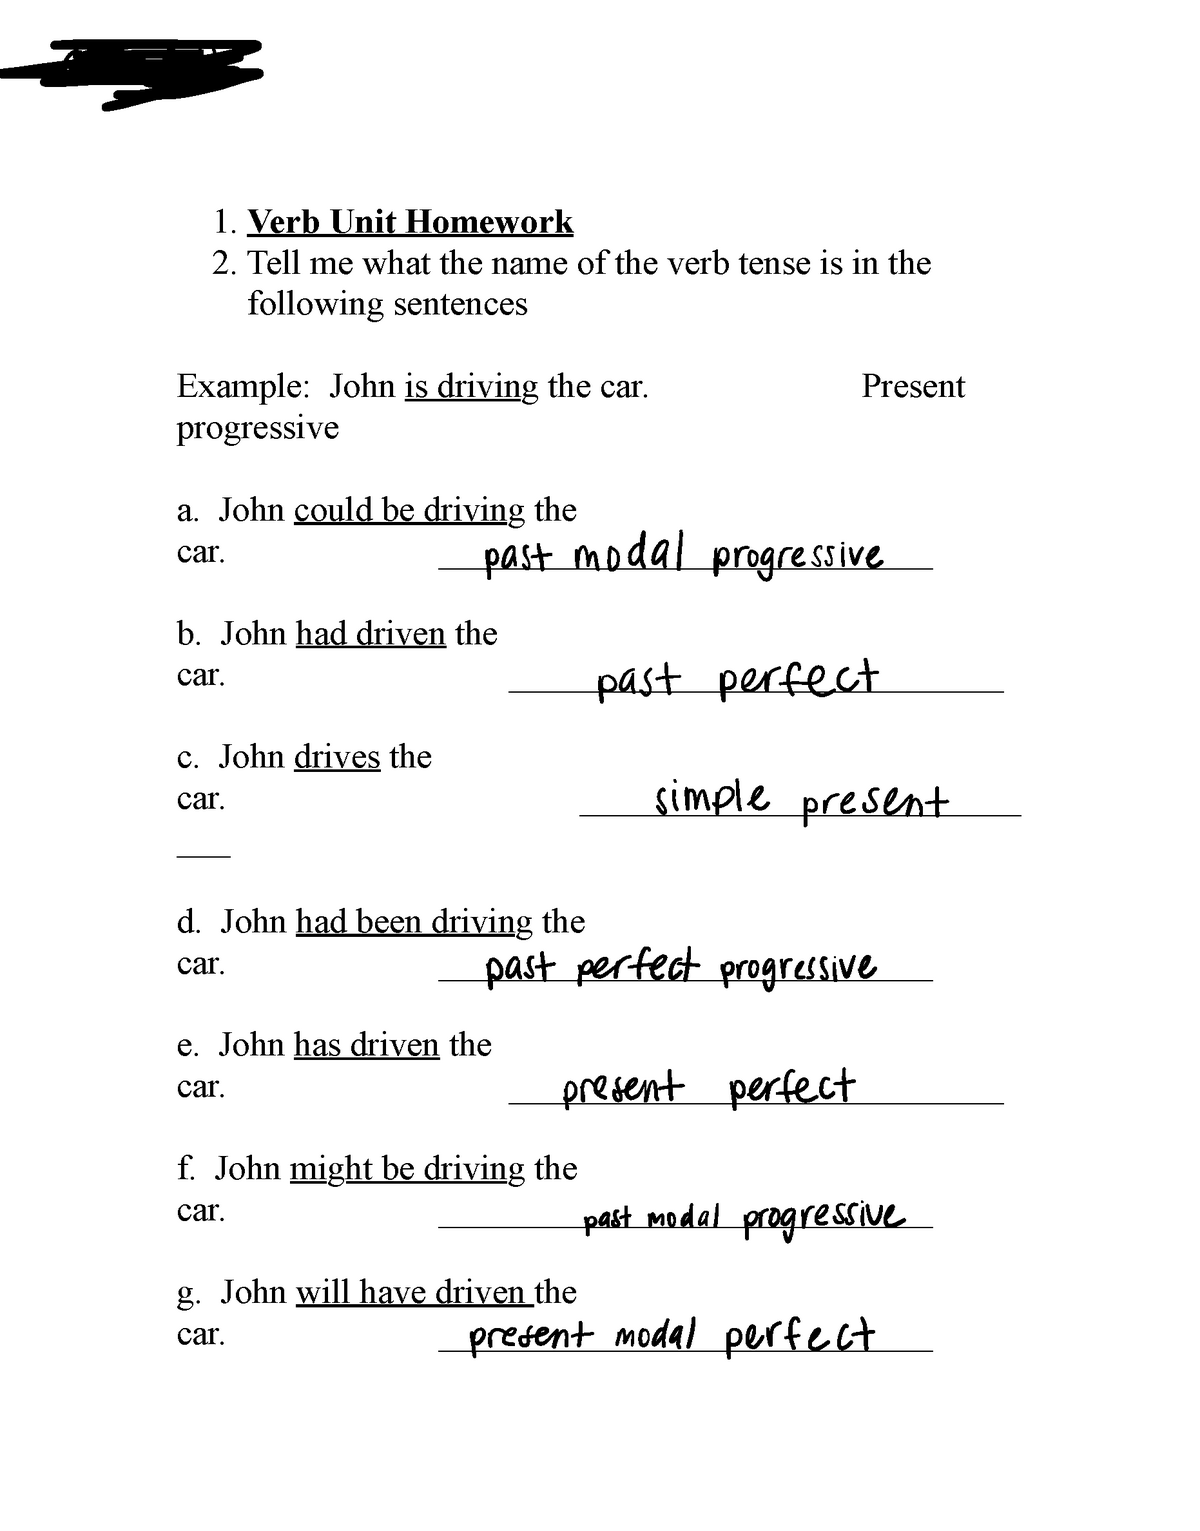 homework of verb